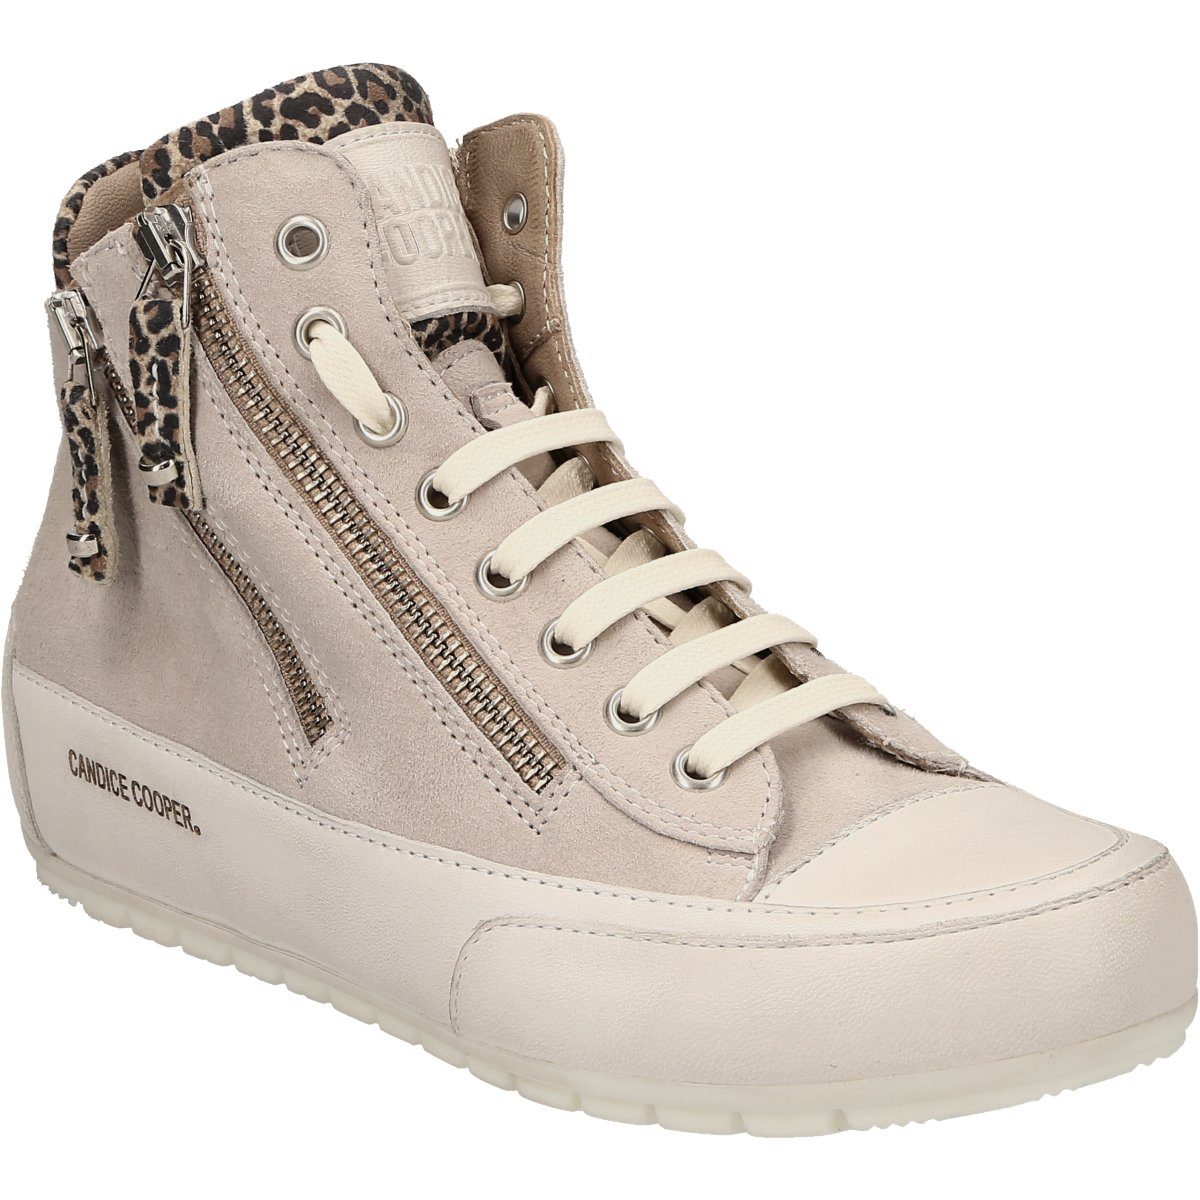 Candice Cooper »Lucia Zip« Sneaker, Material: Rauleder online kaufen | OTTO